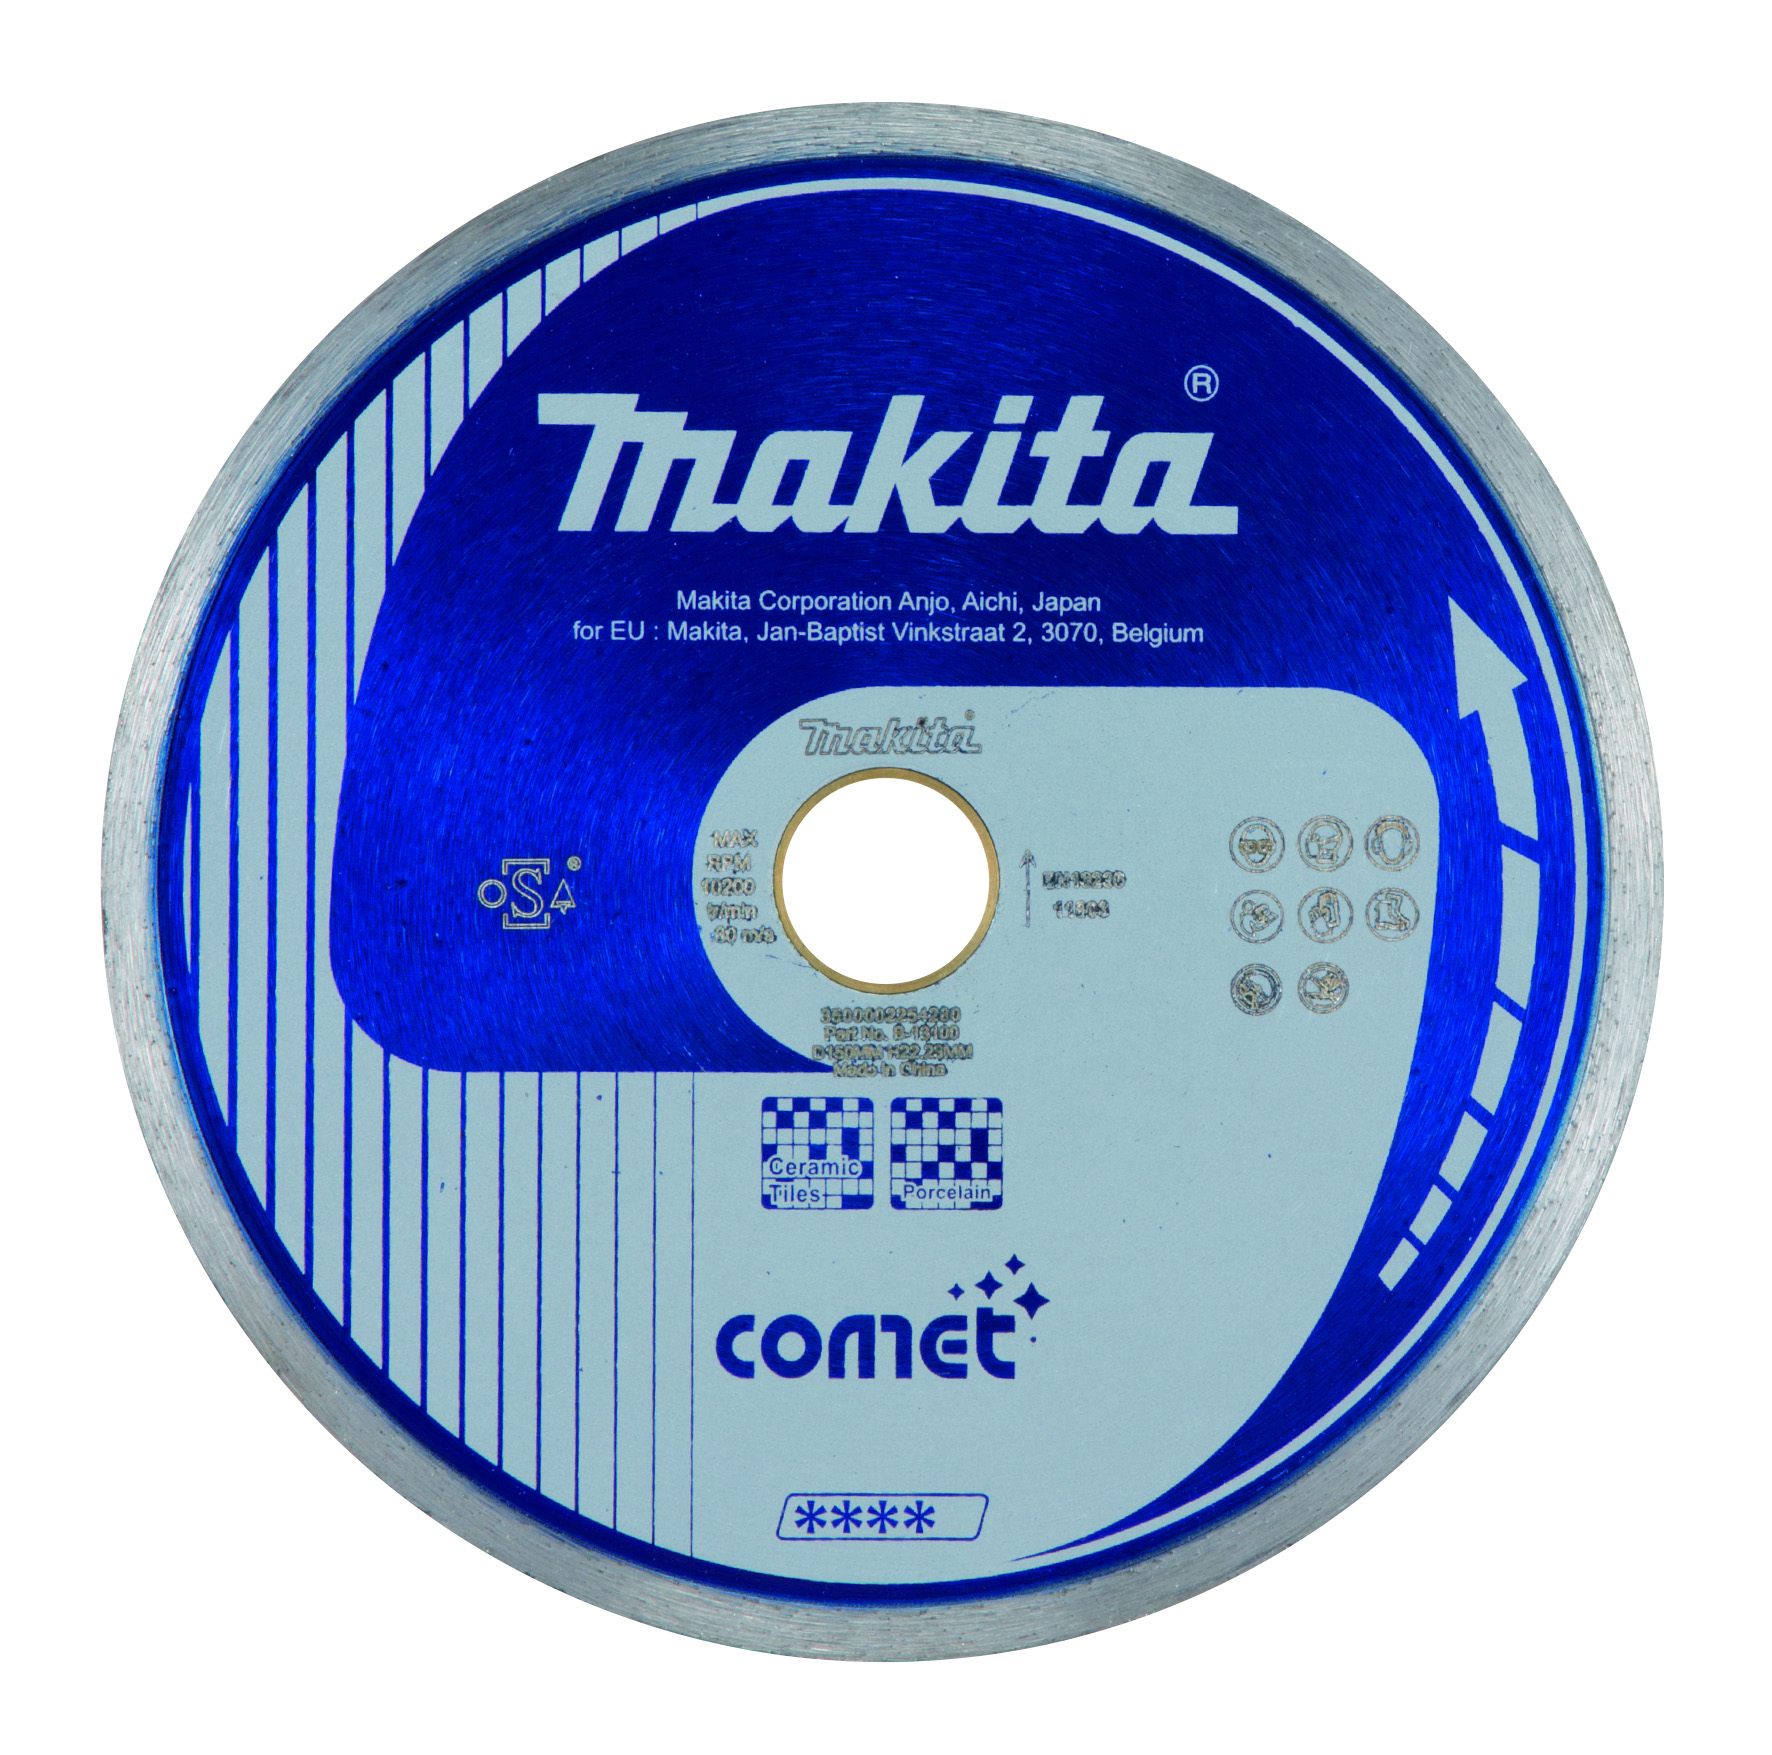 diamantový kotouč Comet Continuous 150x22,23mm Makita B-13100 + Dárek, servis bez starostí v hodnotě 300Kč